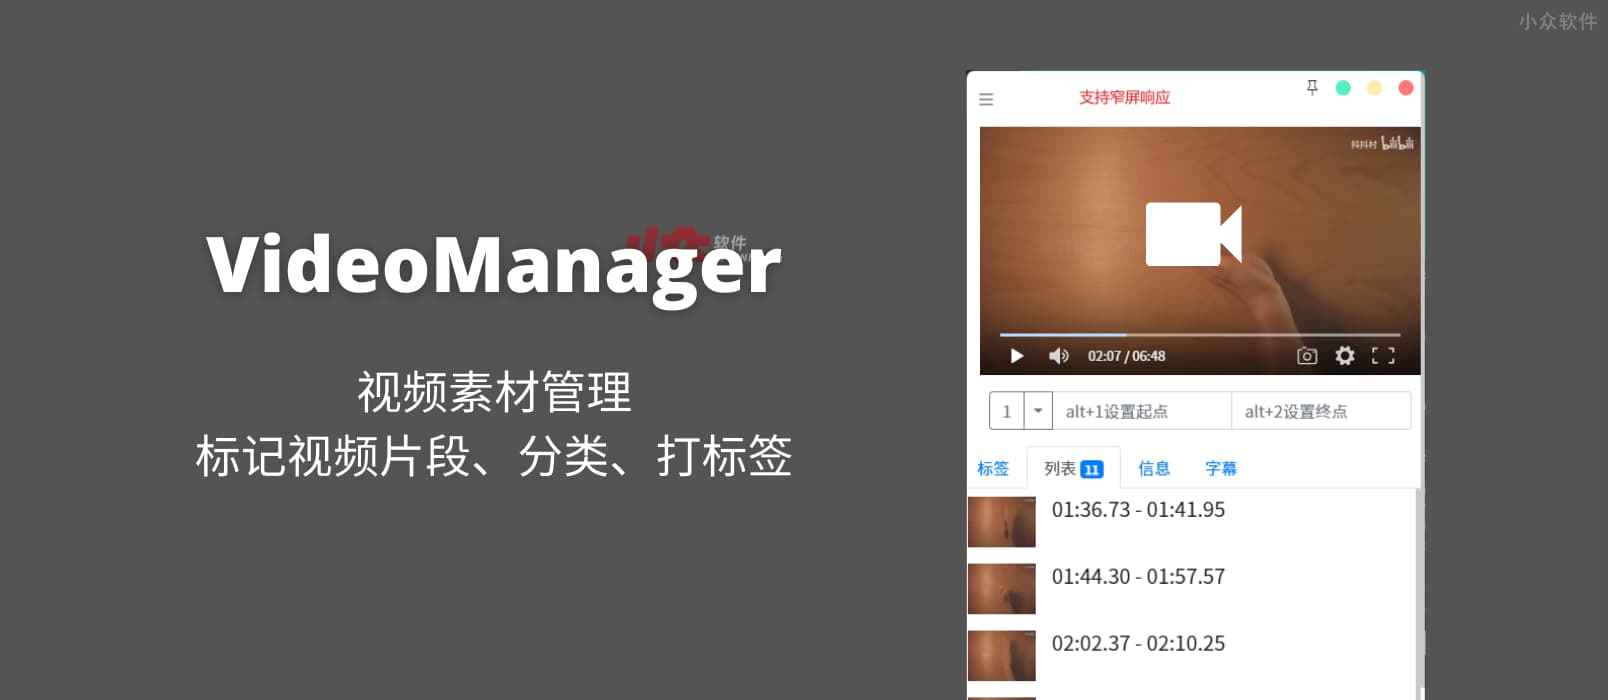 VideoManager - 视频素材管理：标记视频片段标记、分类、打标签，然后批量搜索导出[Windows] 1